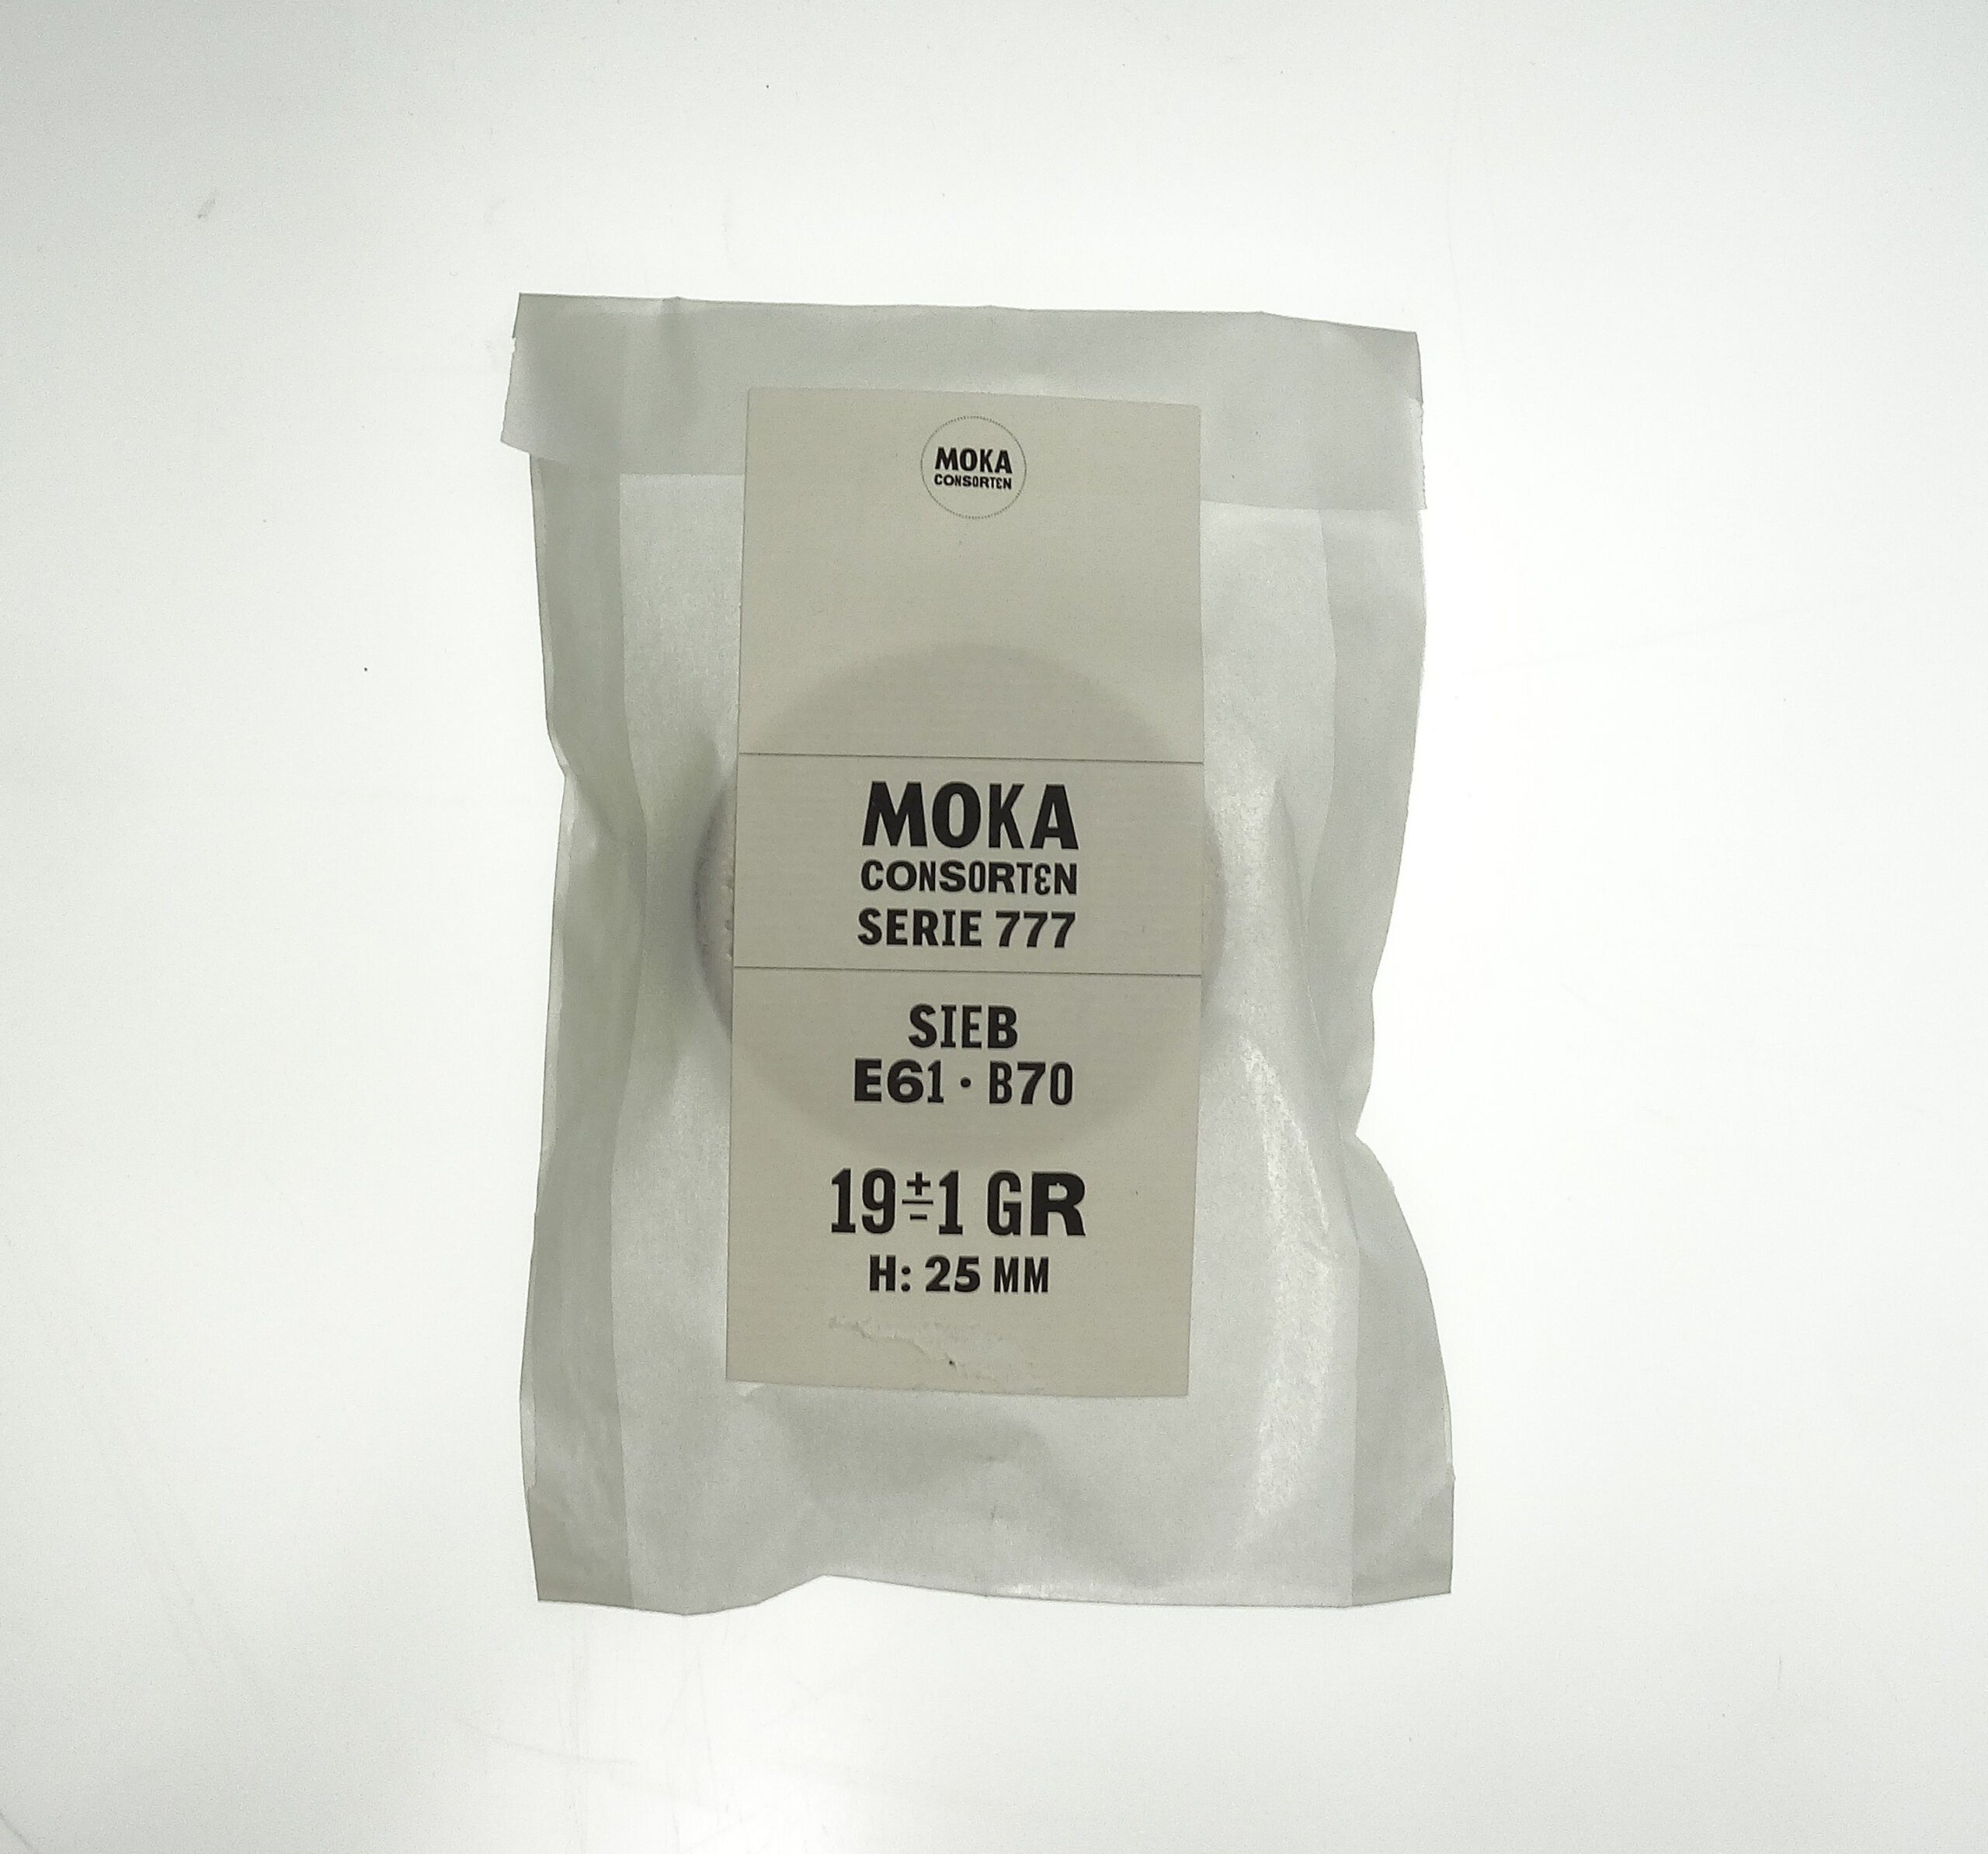 Moka Consorten Präzisions-Sieb, Moka777, gr ridgeless, Espressomaschine 15±1 E61